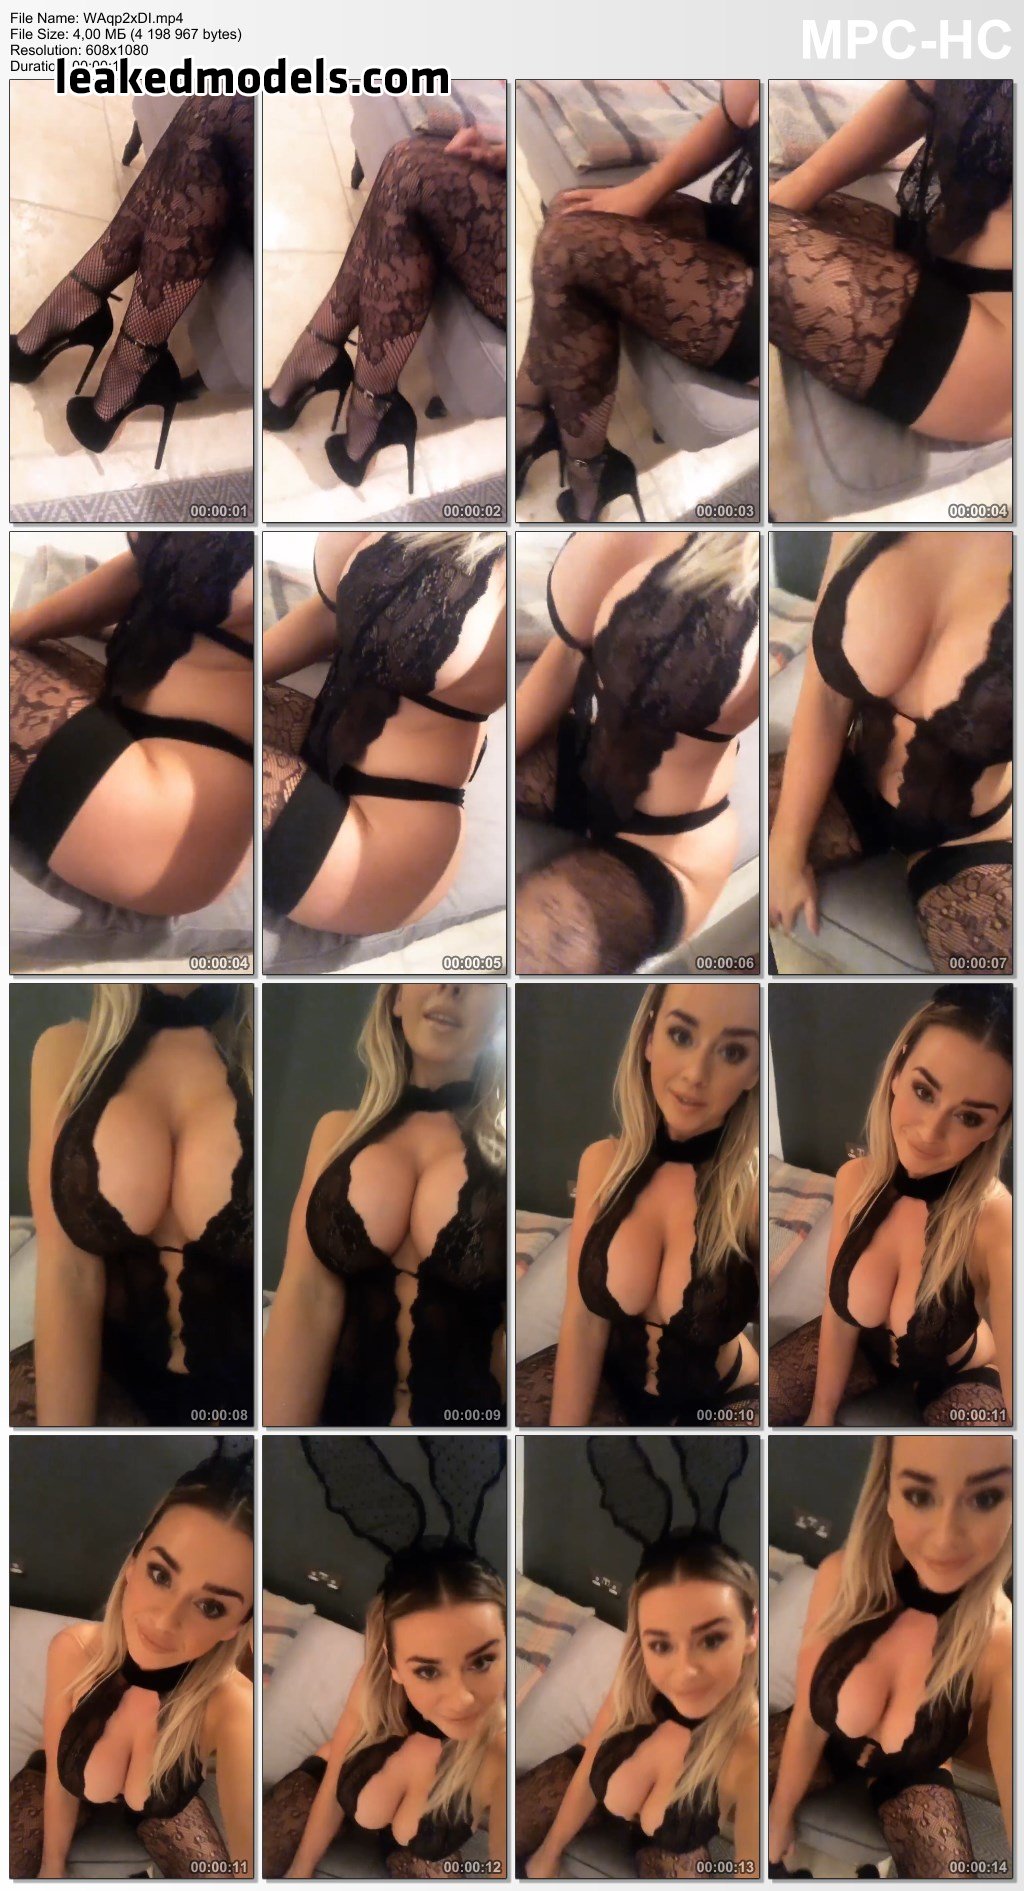 melissa debling leaked nude leakedmodels.com 0008 - Melissa Debling Instagram Nude Leaks (27 Photos)